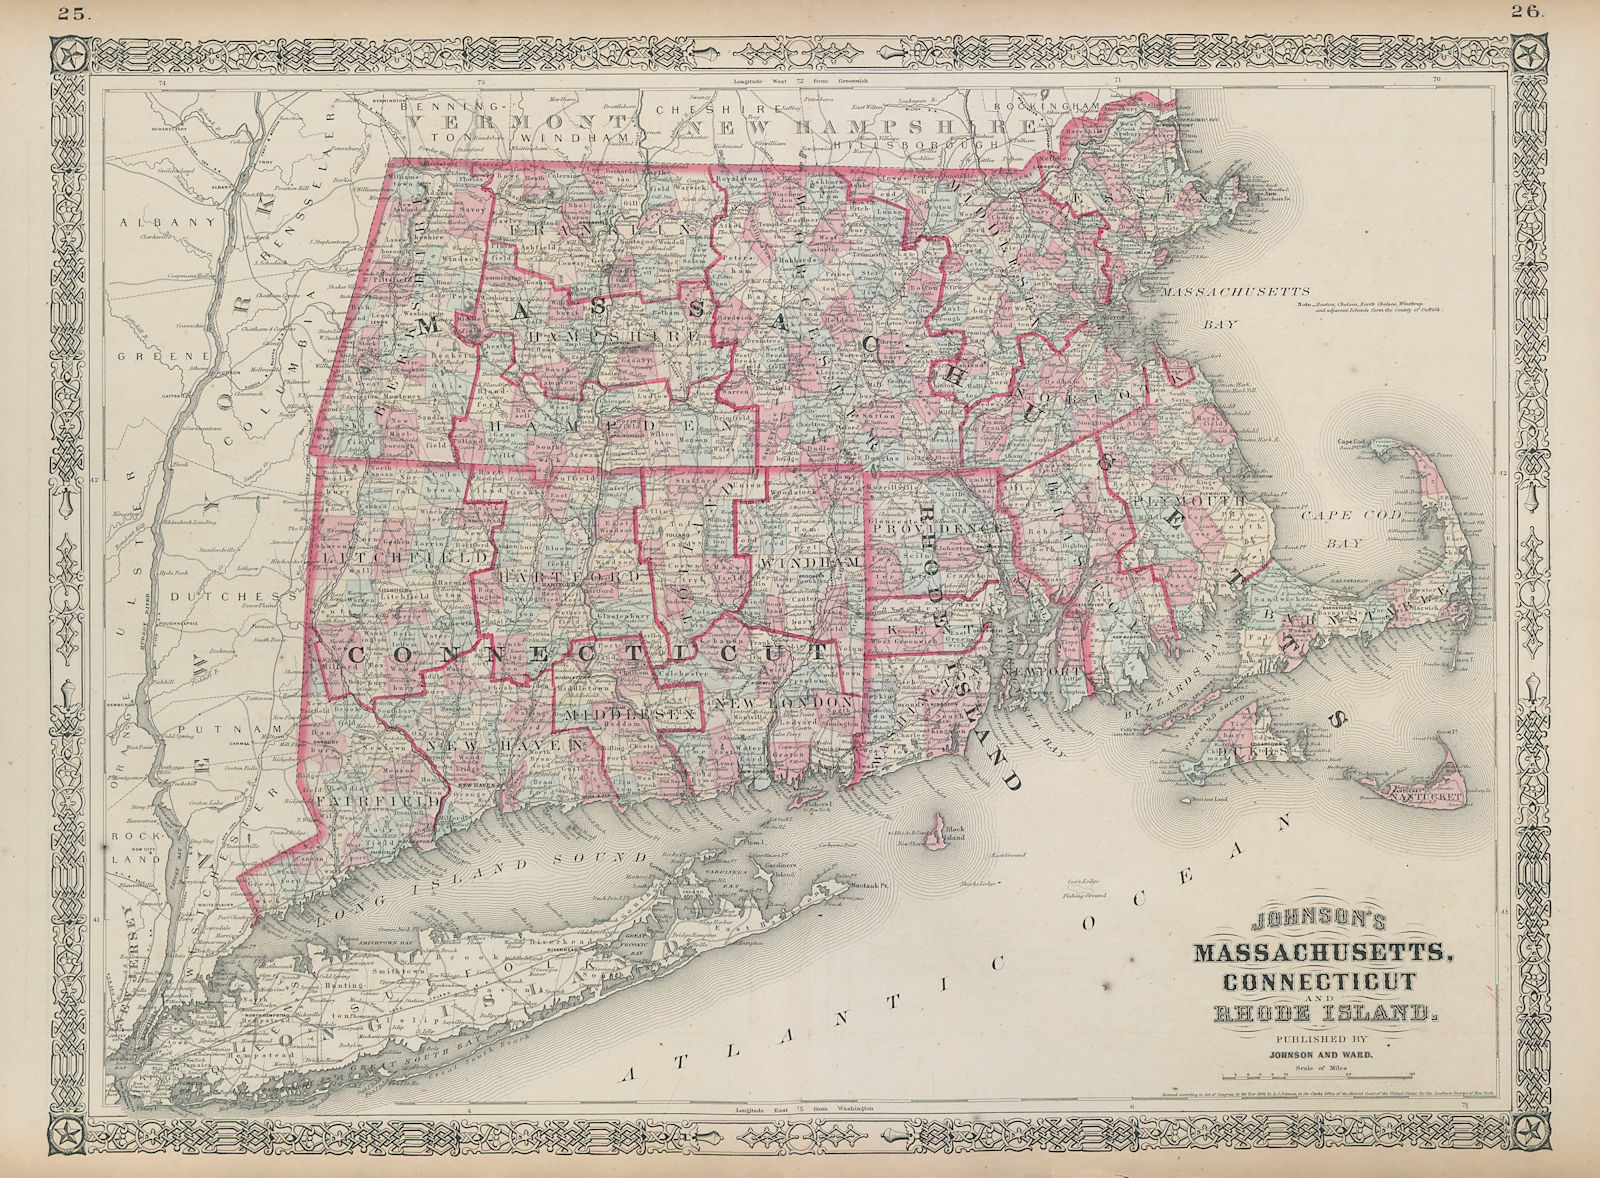 Associate Product Johnson's Massachusetts, Connecticut & Rhode Island 1865 old antique map chart